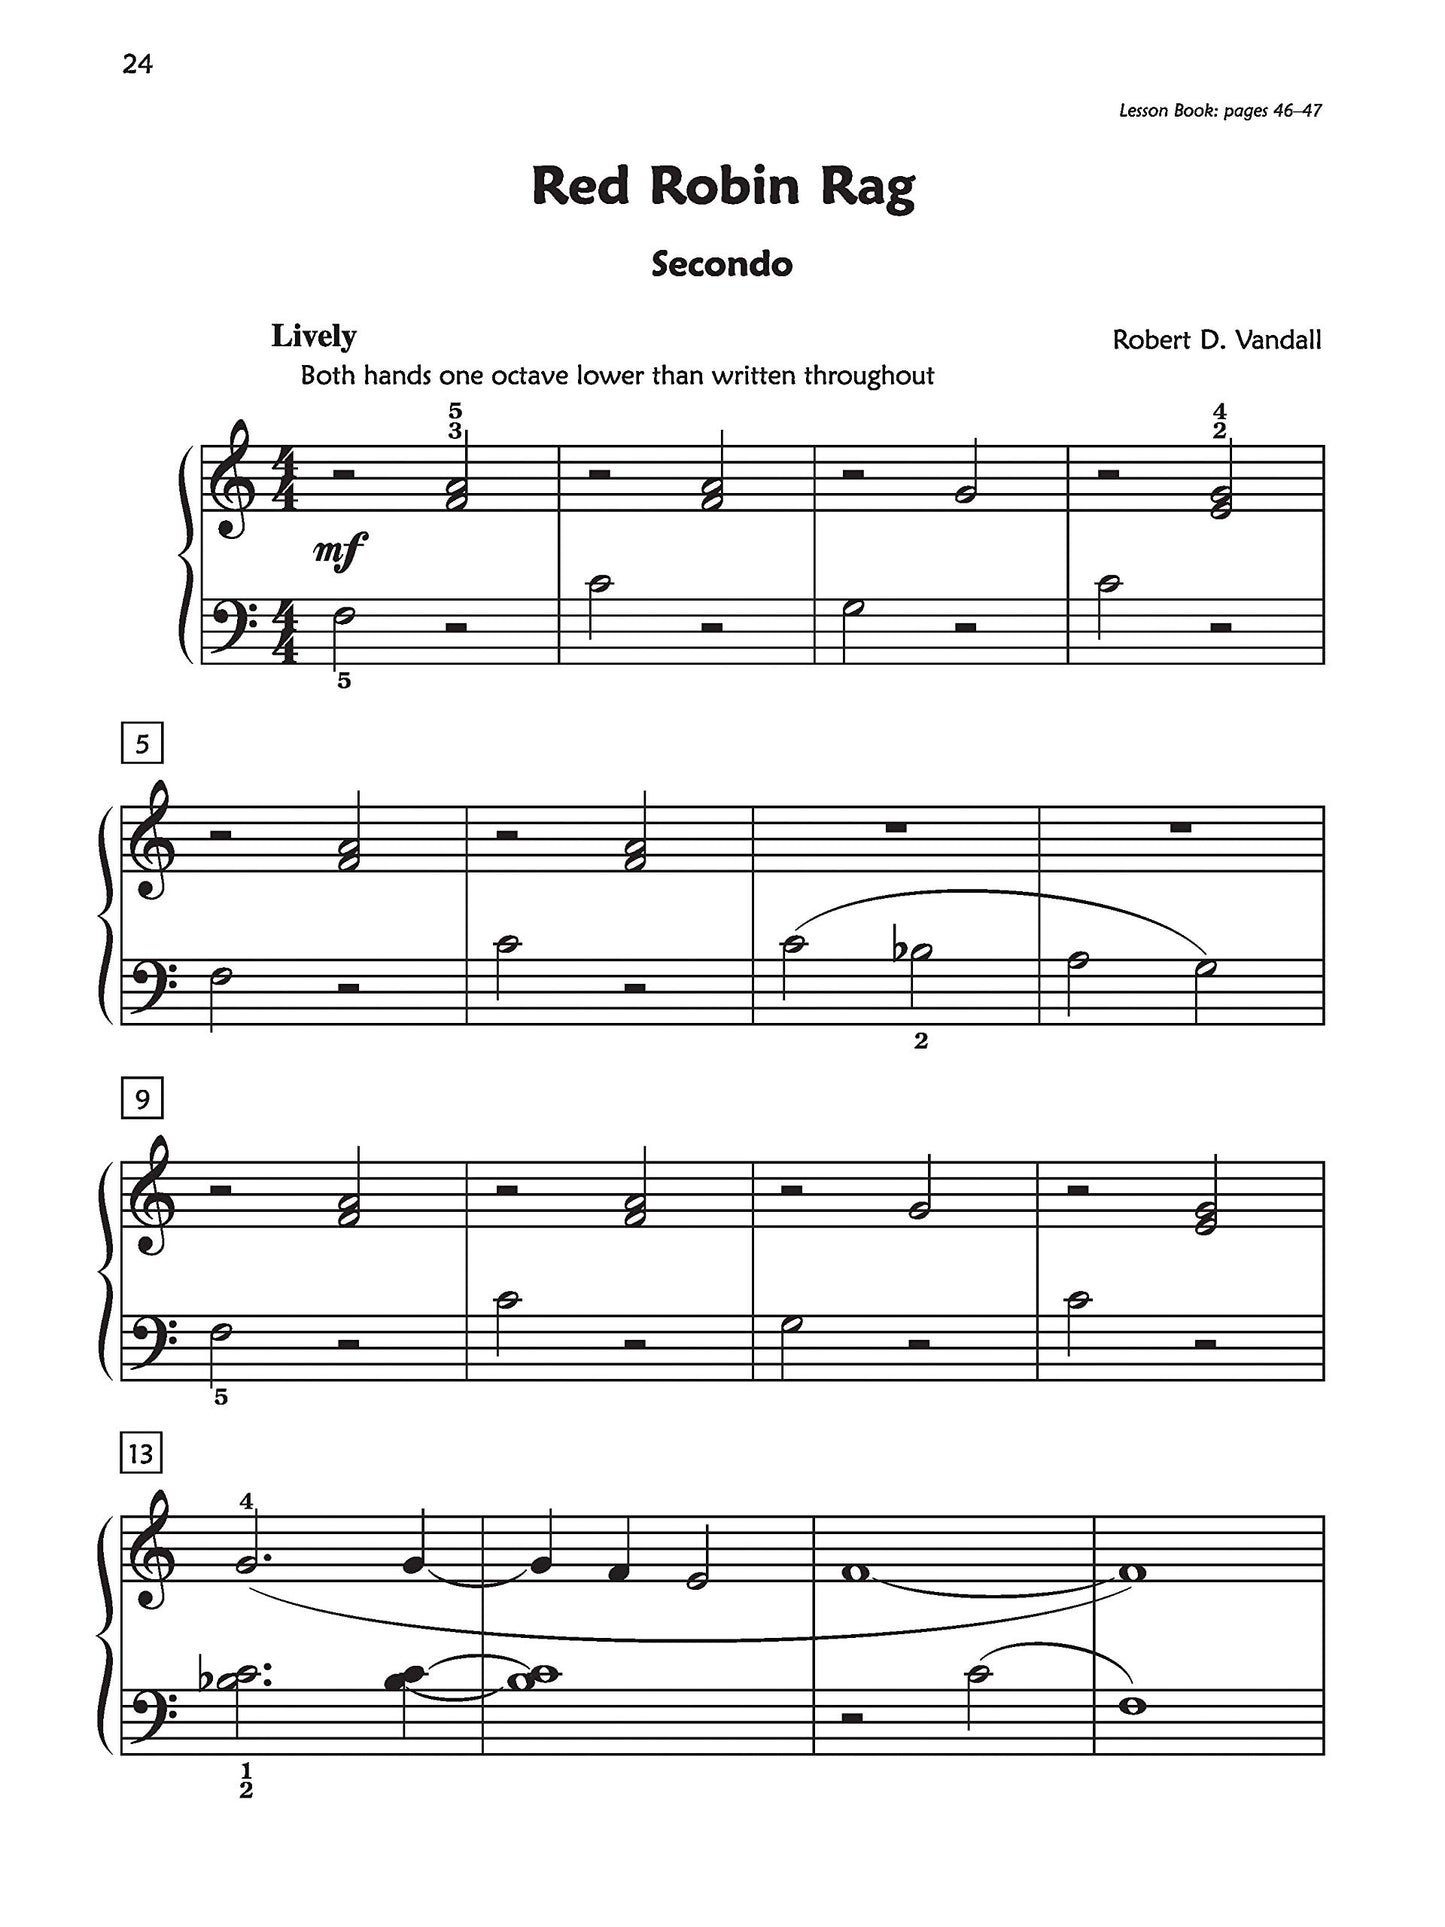 Alfred's Premier Piano Course, Duets 1B Book